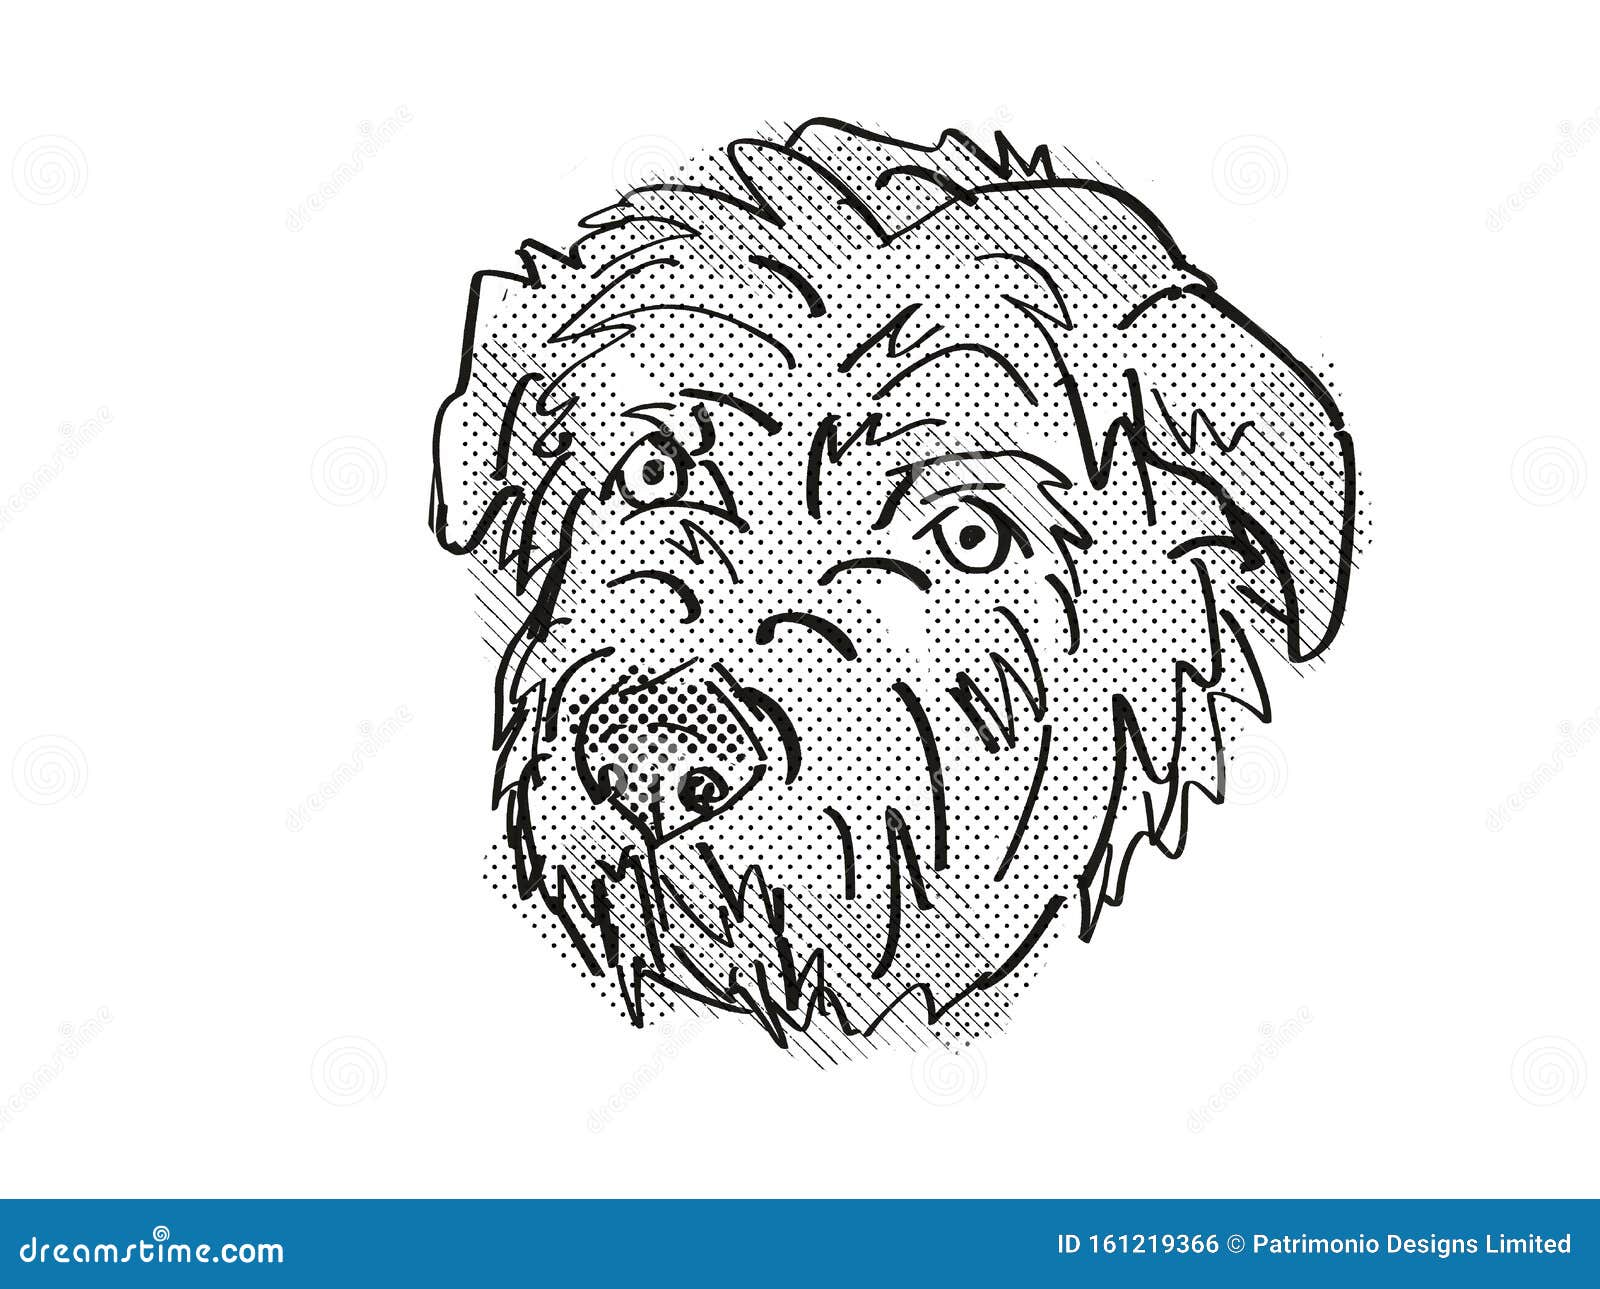 Glen Of Imaal Terrier Dog Breed Cartoon Retro Drawing Stock Illustration Illustration Of Hound Imaal 161219366